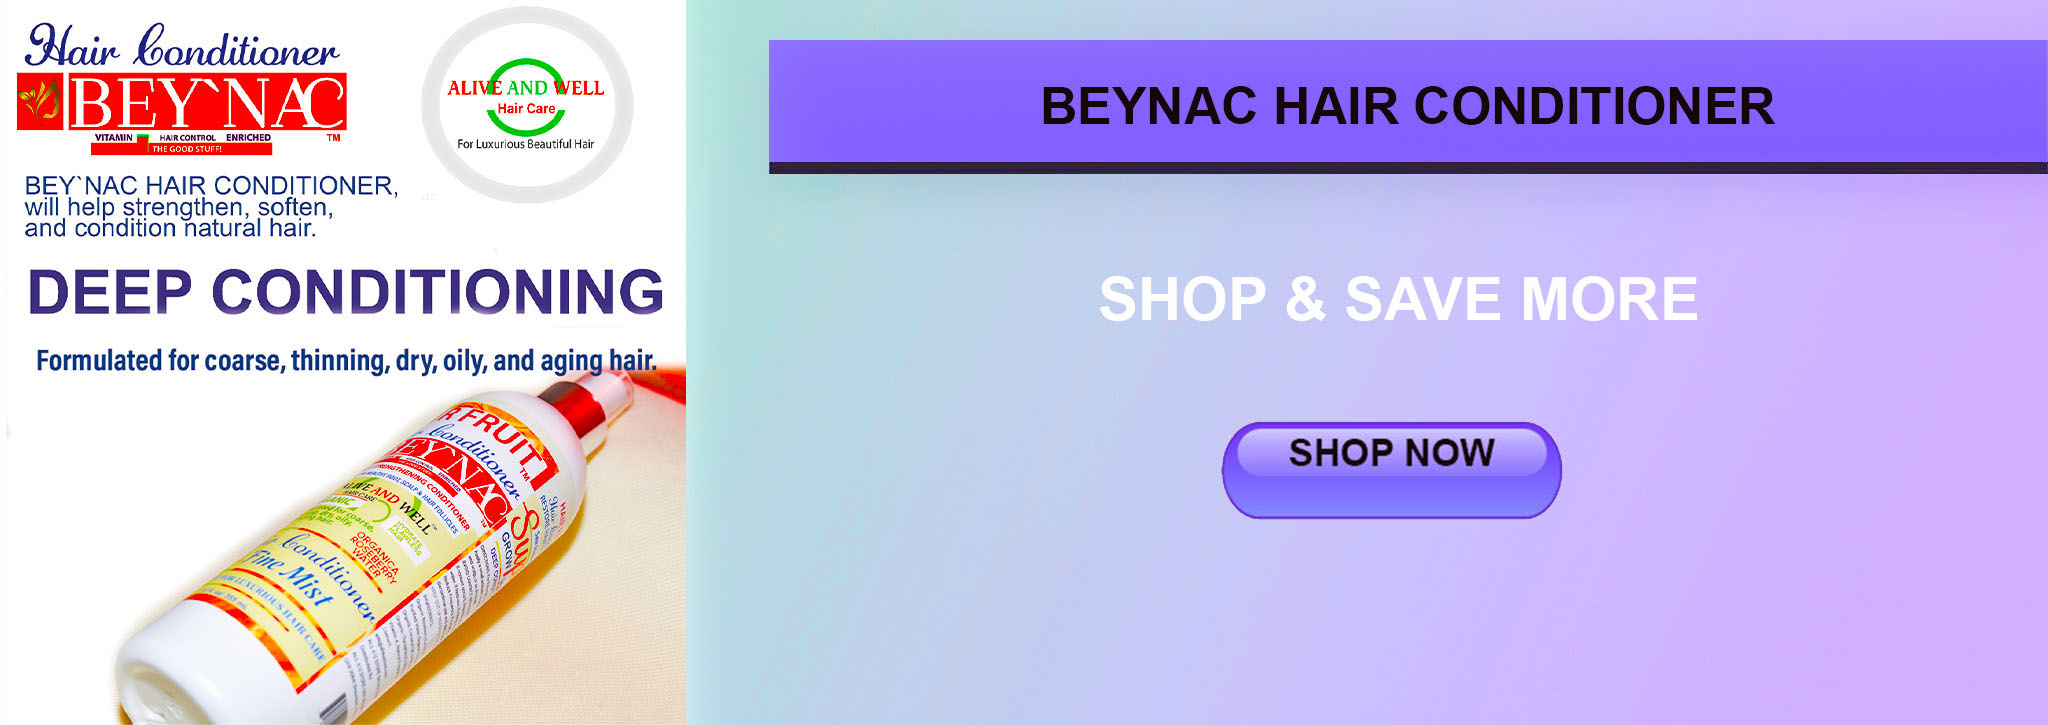 beynac_hair_conditioner-all2d.jpg